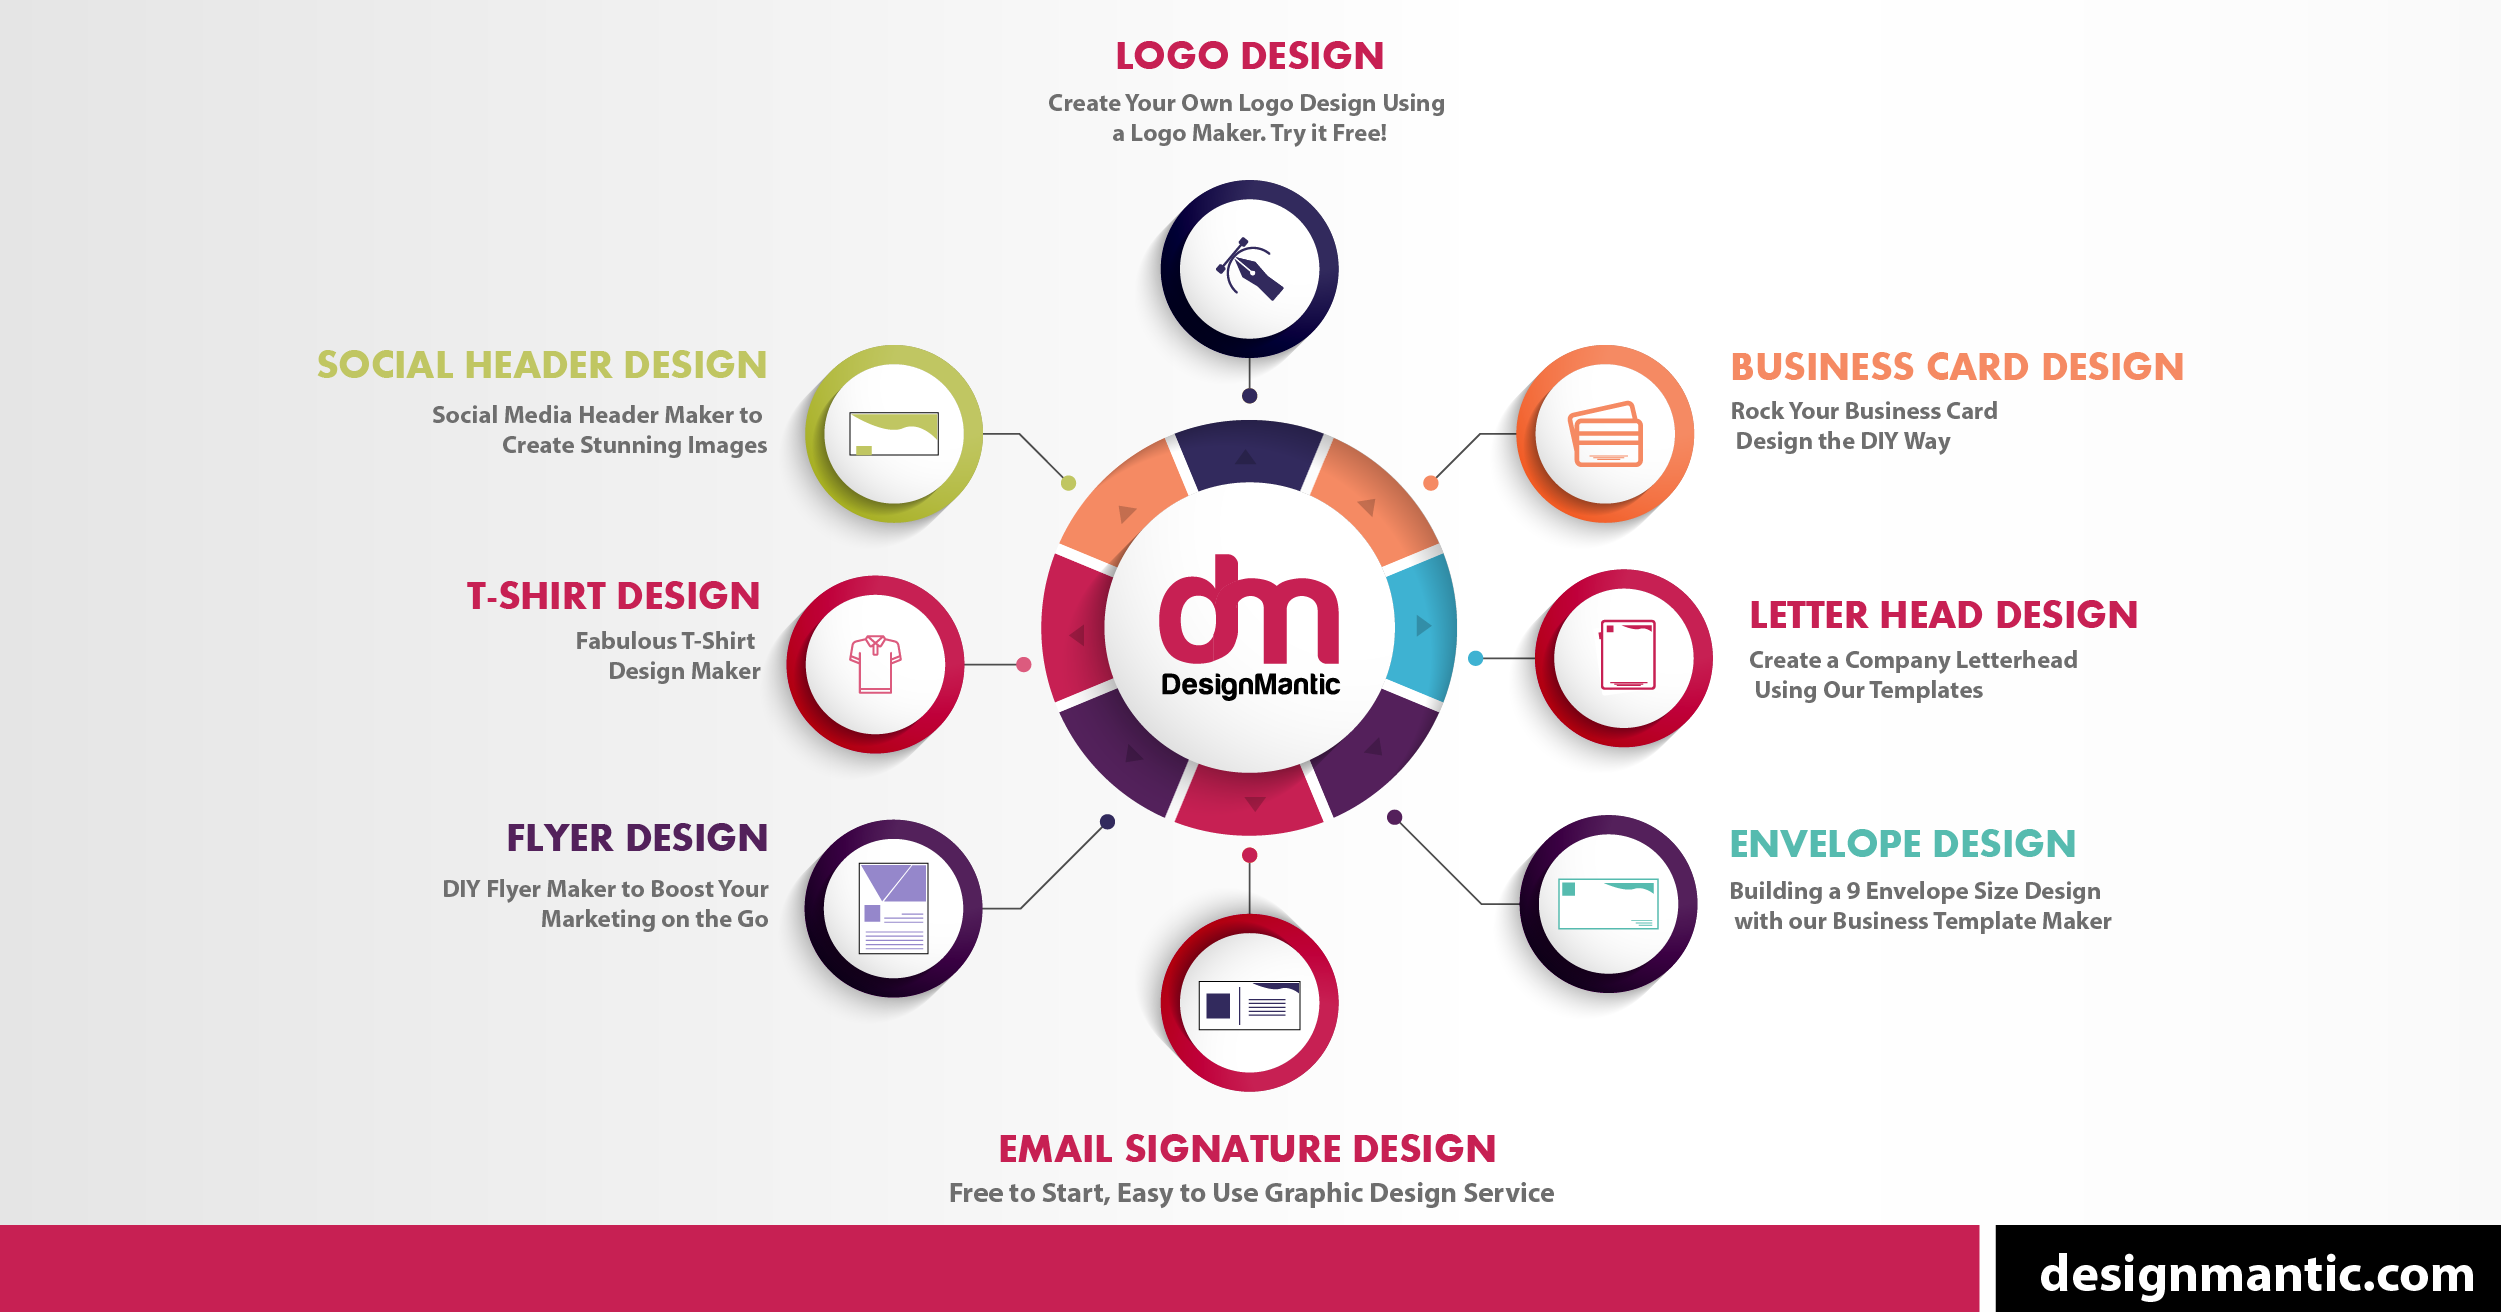 Verwonderend Graphic Design Software & Logo Tool | DesignMantic: The Design Shop WH-62